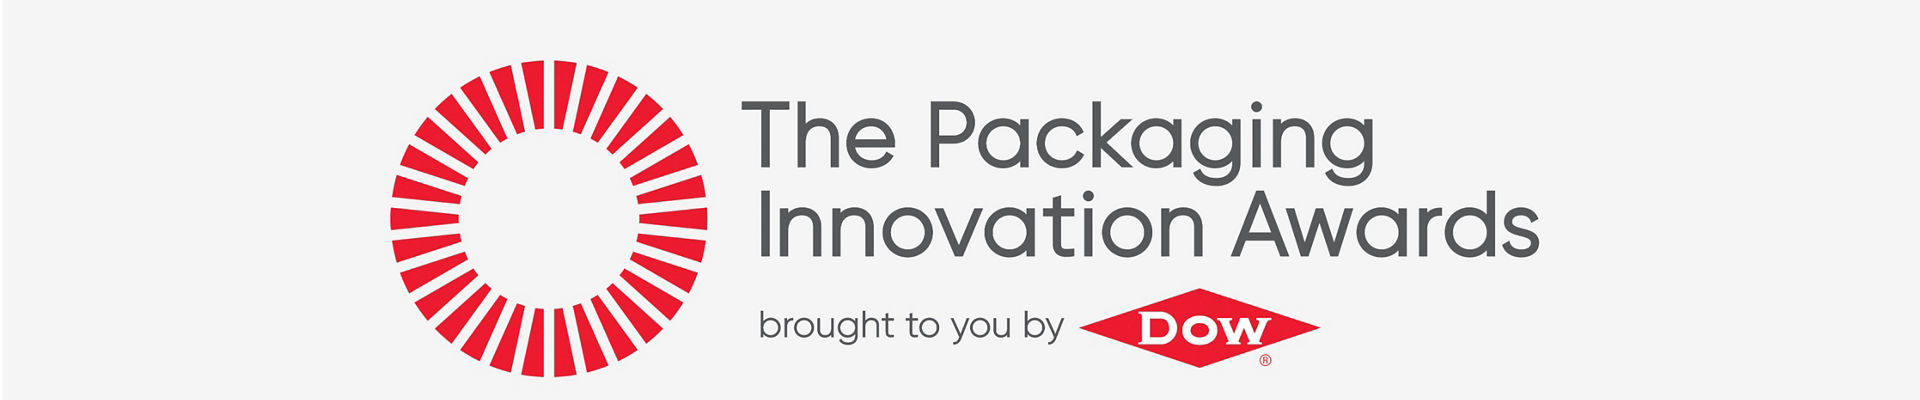 The Packaging Innovation Award Logo 